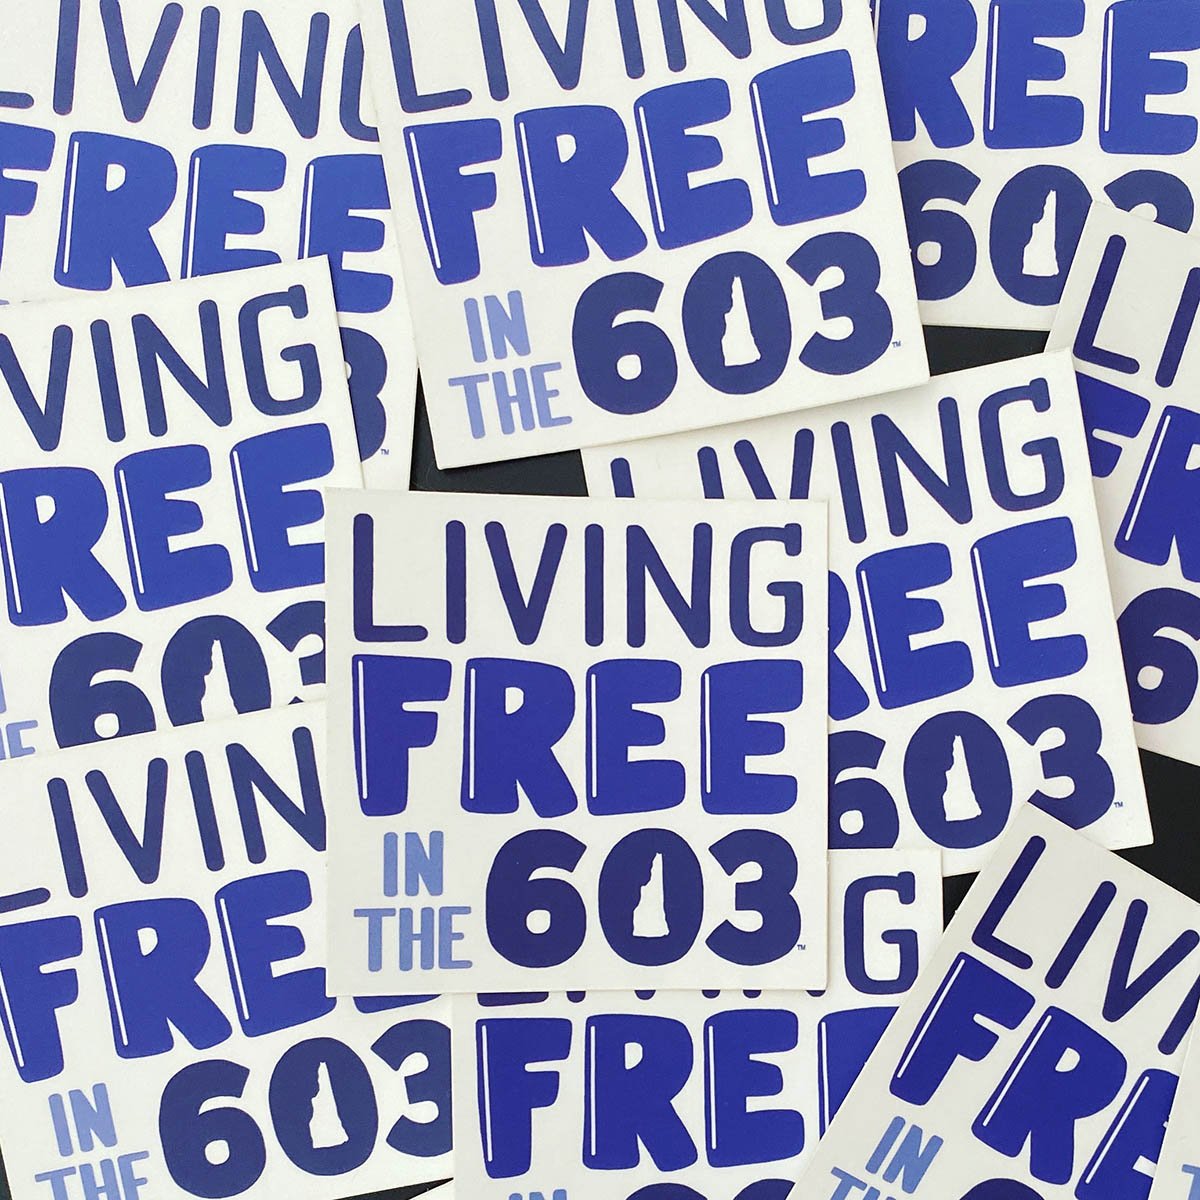 livingfree-stickers-amandarouse.jpg